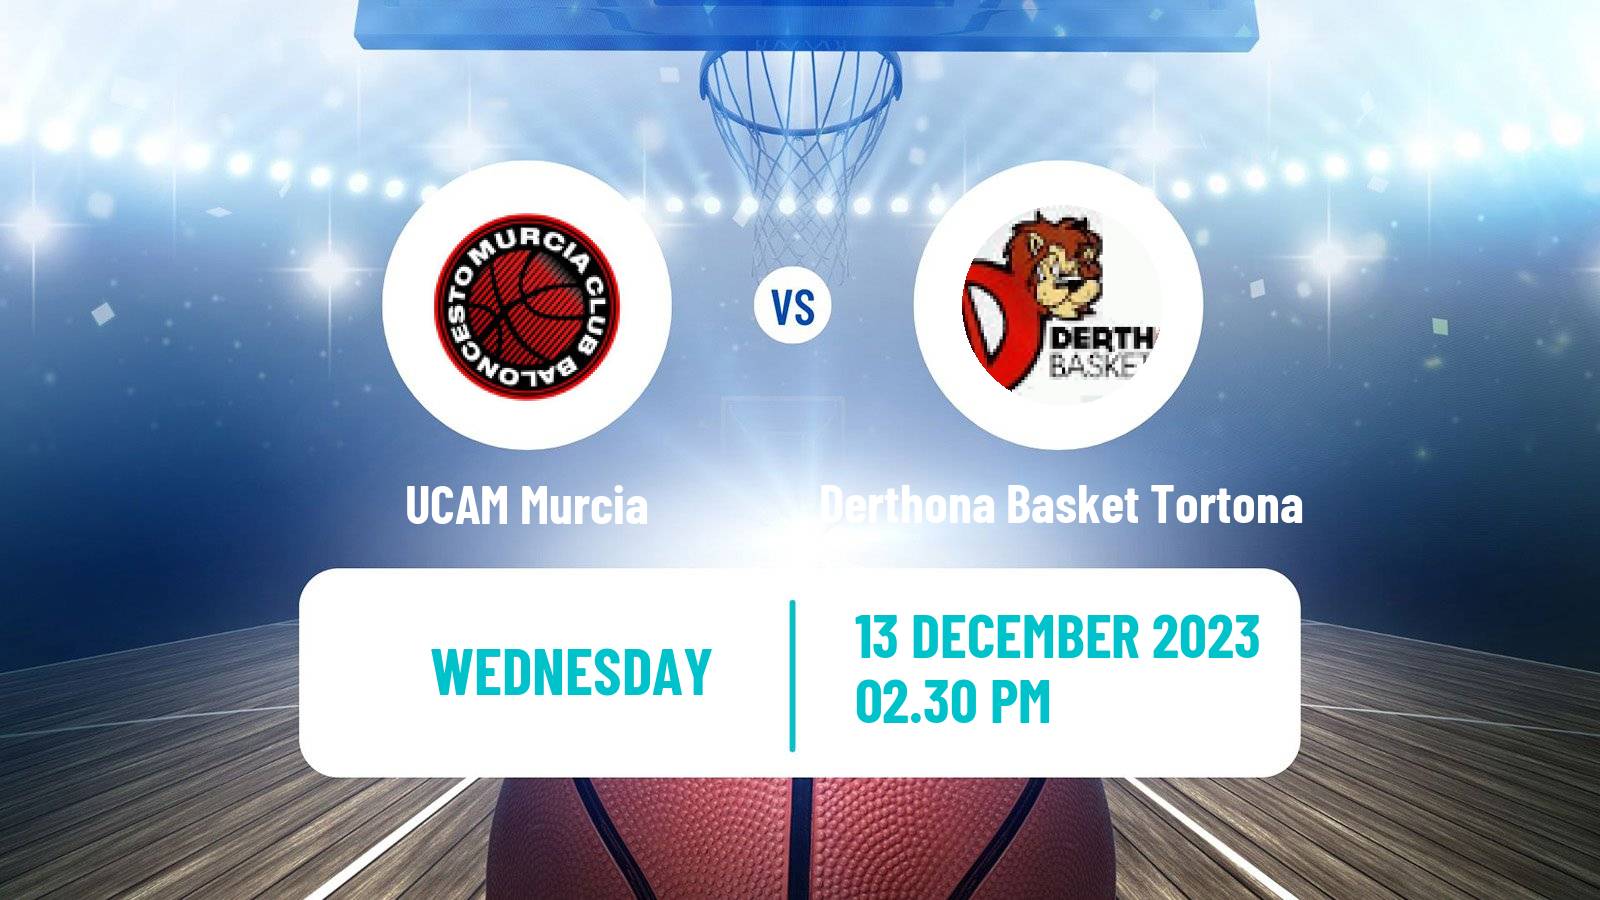 Basketball Champions League Basketball UCAM Murcia - Derthona Basket Tortona